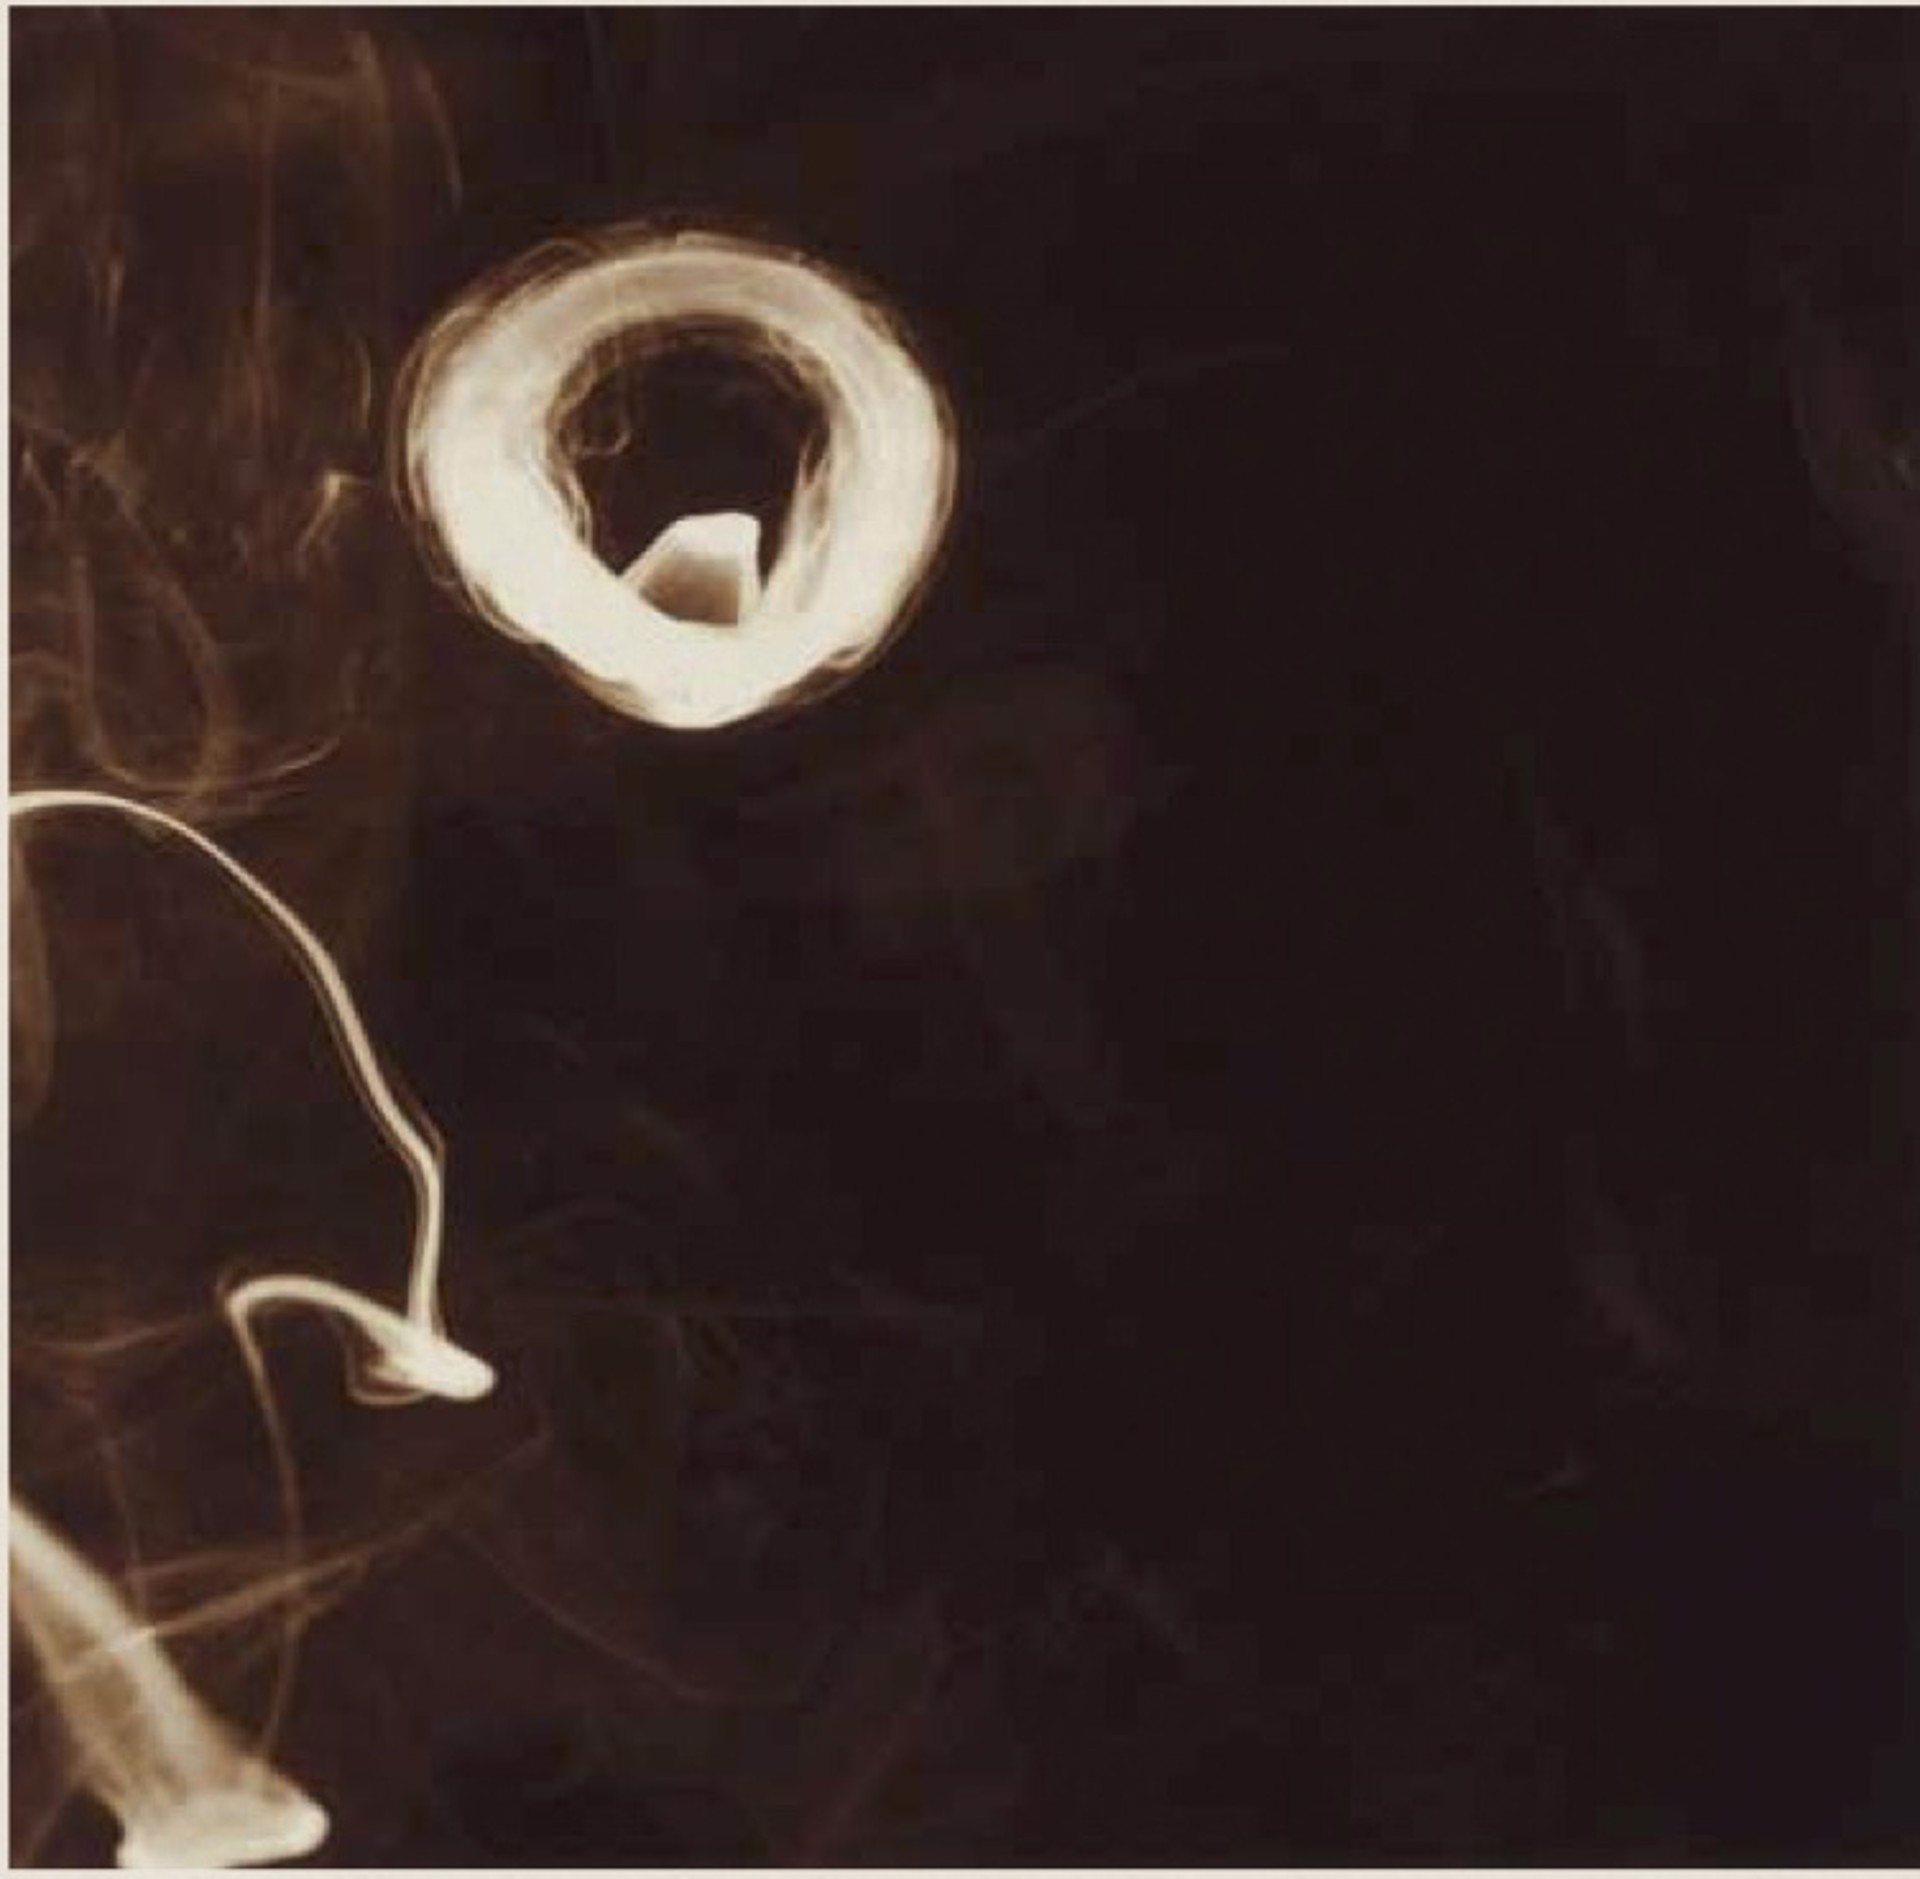 Smoke Rings, June 6, 2001 by Donald Sultan